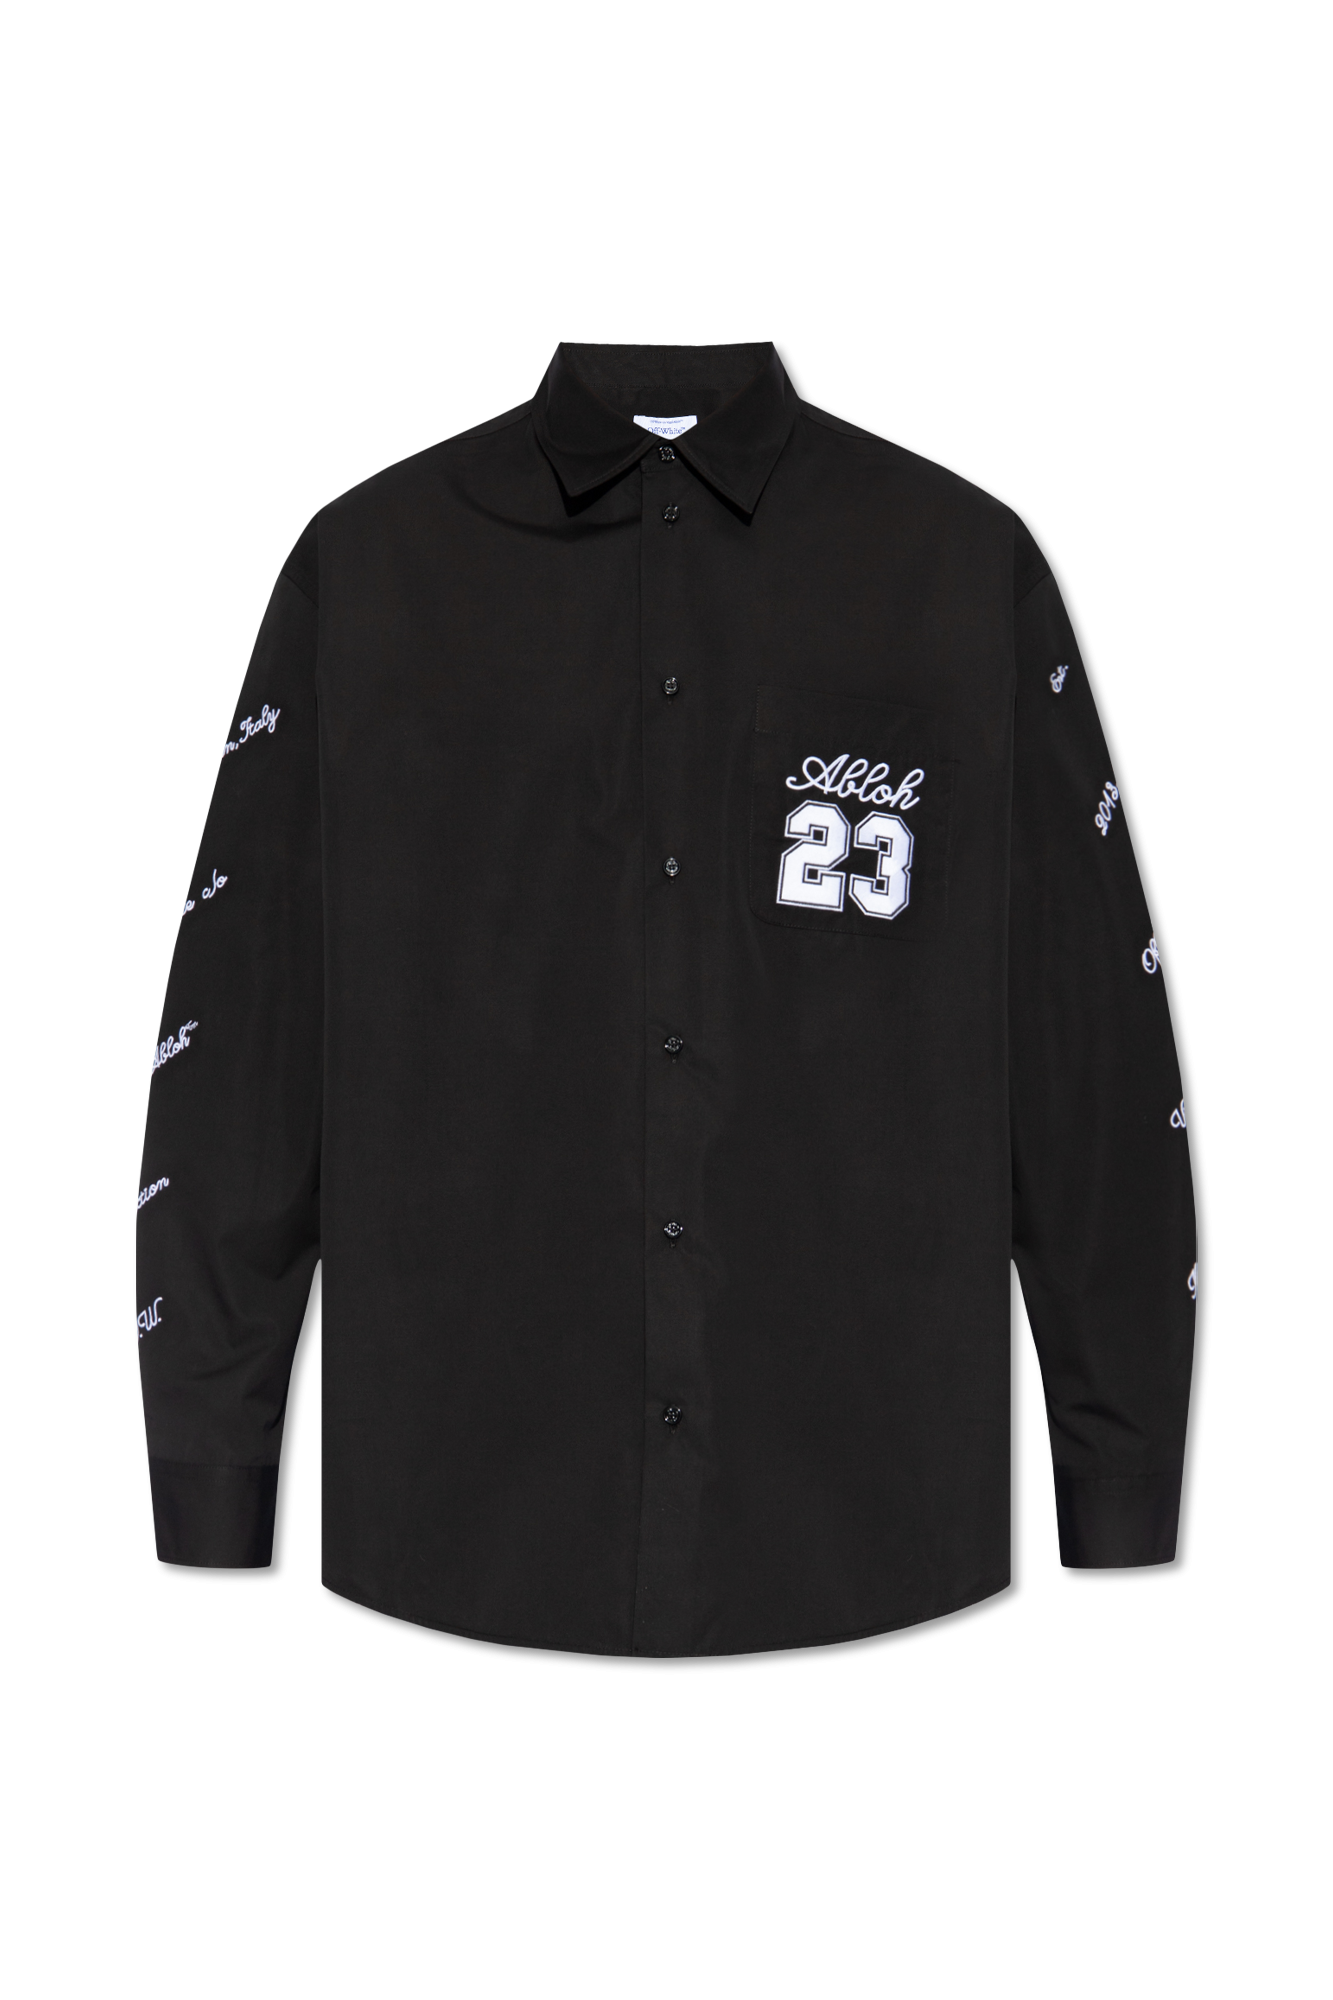 Black Shirt with logo Off-White - Vitkac Italy